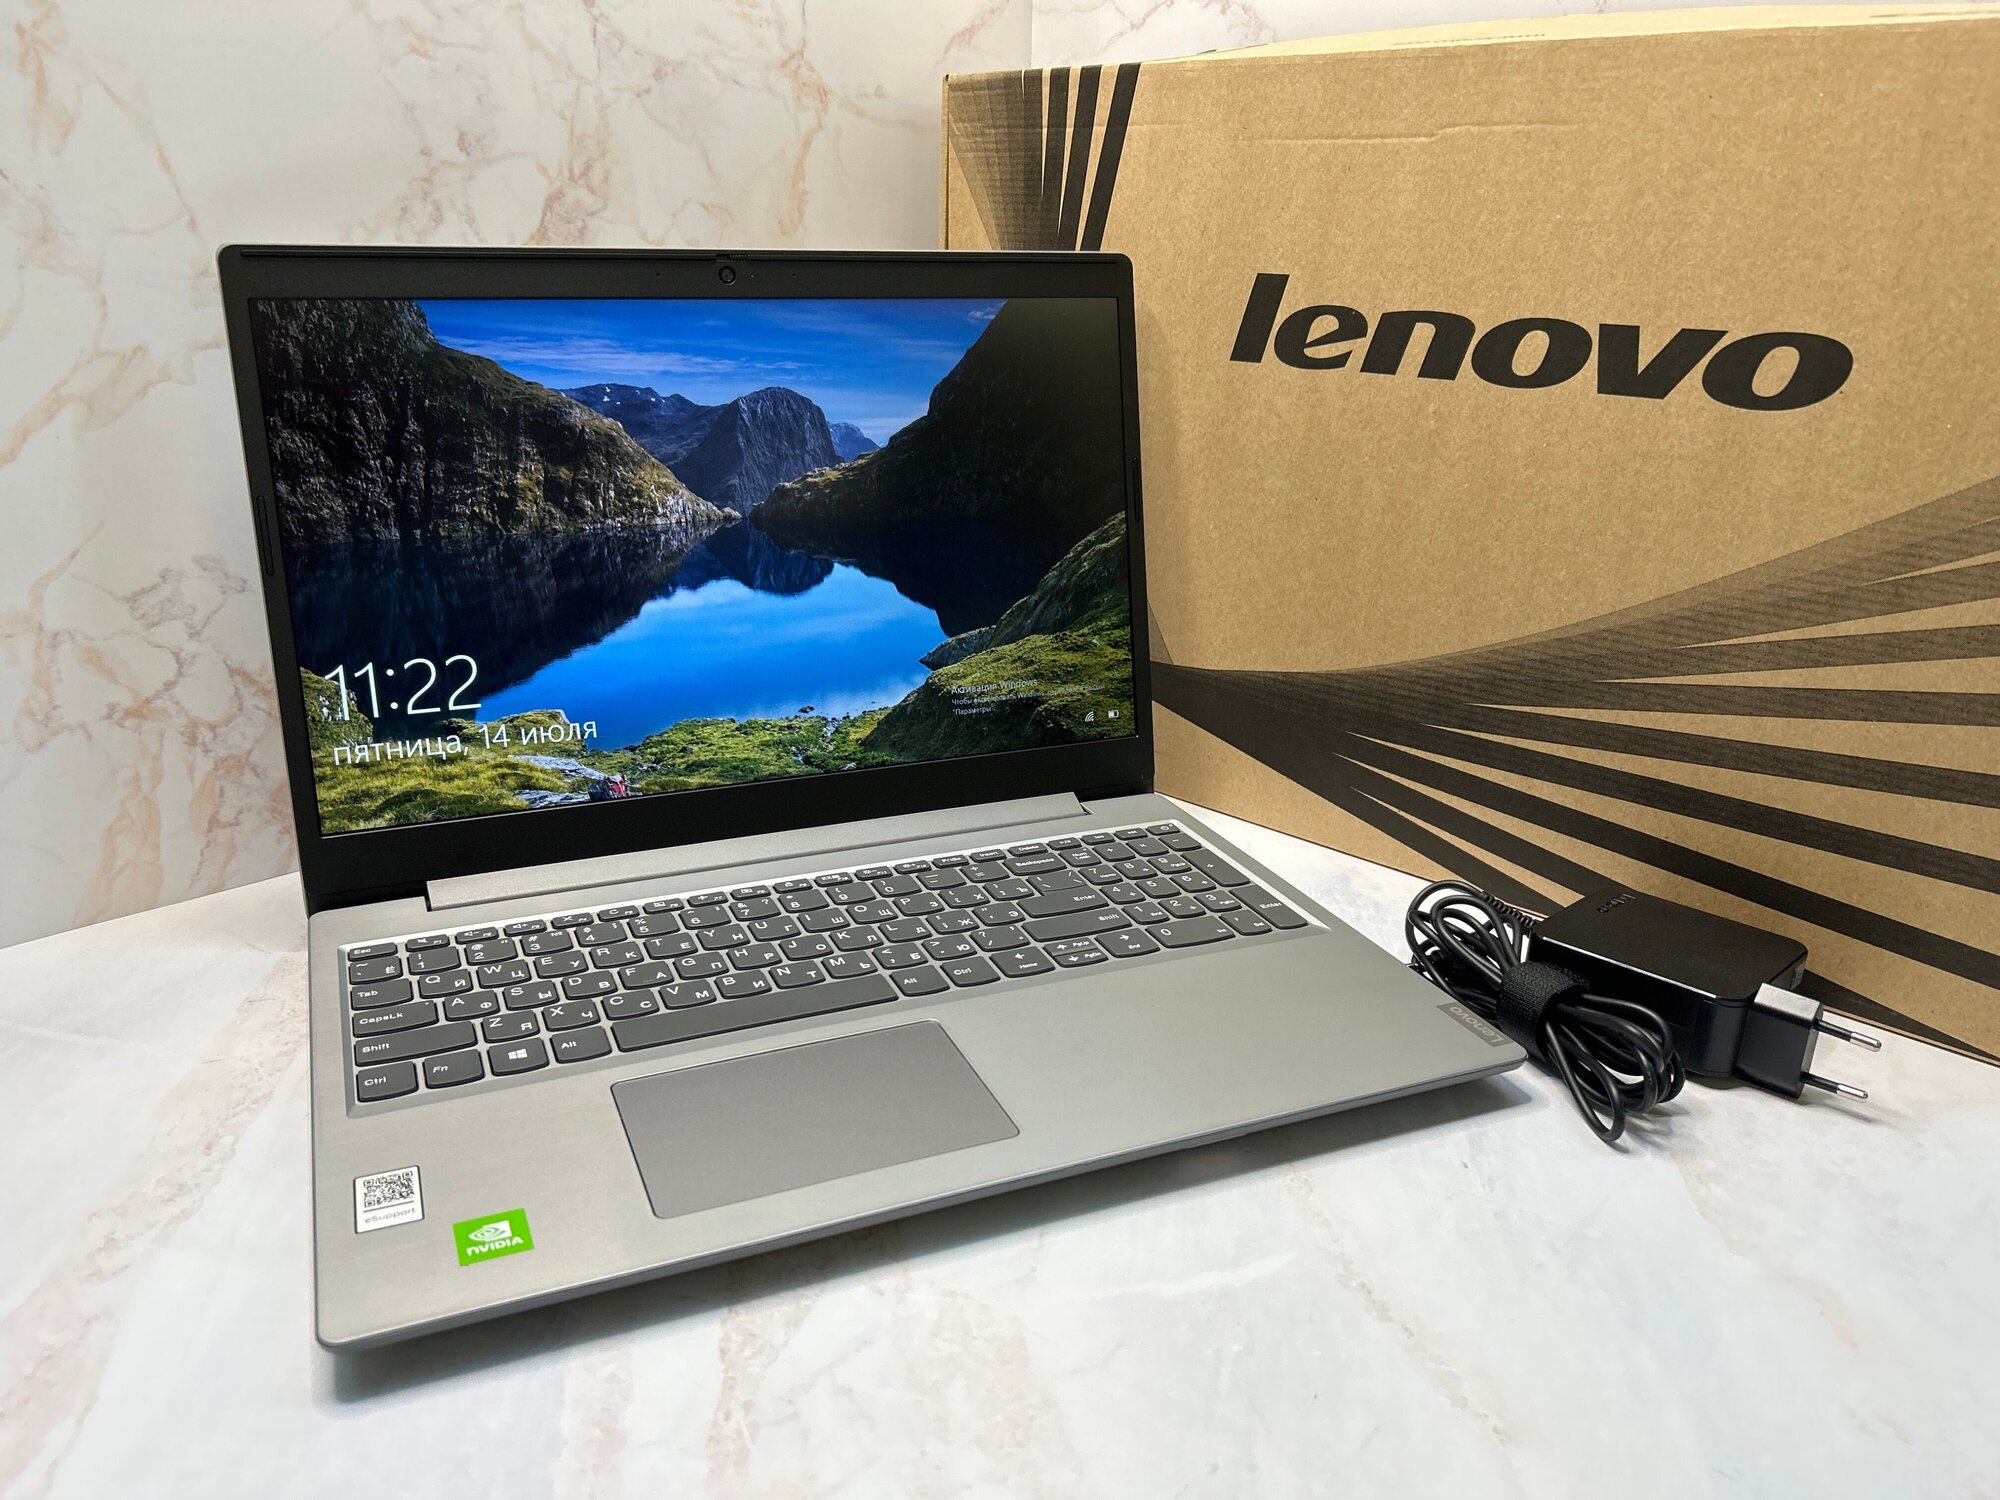 Ноутбук Lenovo IdeaPad L340-15IWL. Конфигурация: I3-8145U/8GB/256GB/GF MX230/DOS/FHD